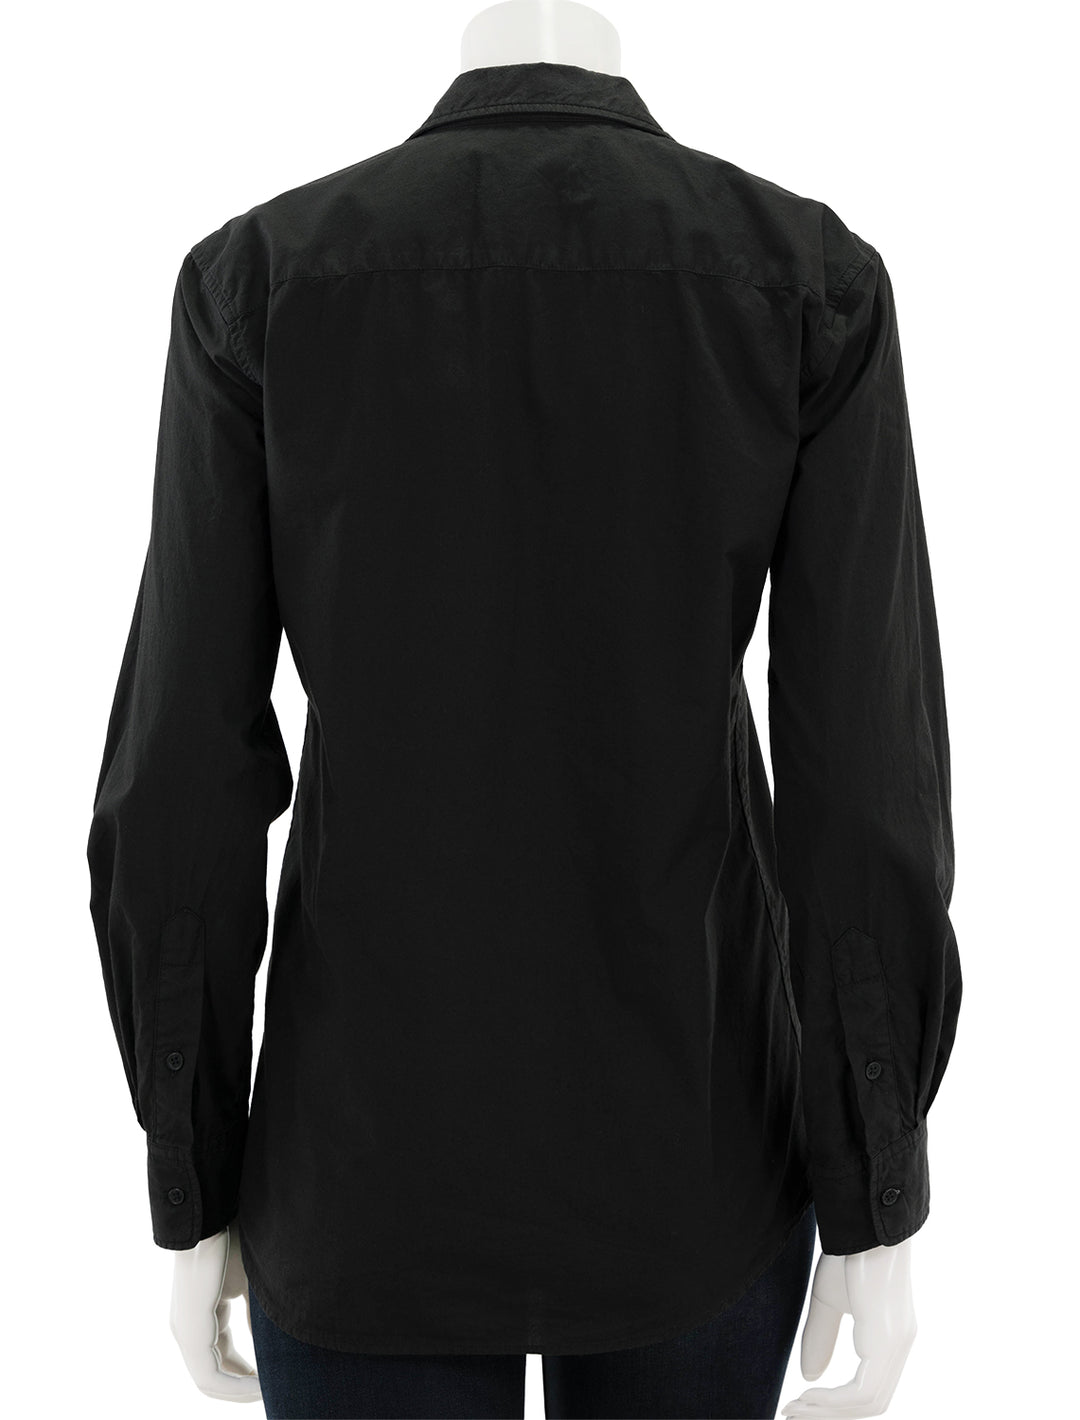 Back view of Nili Lotan's raphael classic shirt in black.